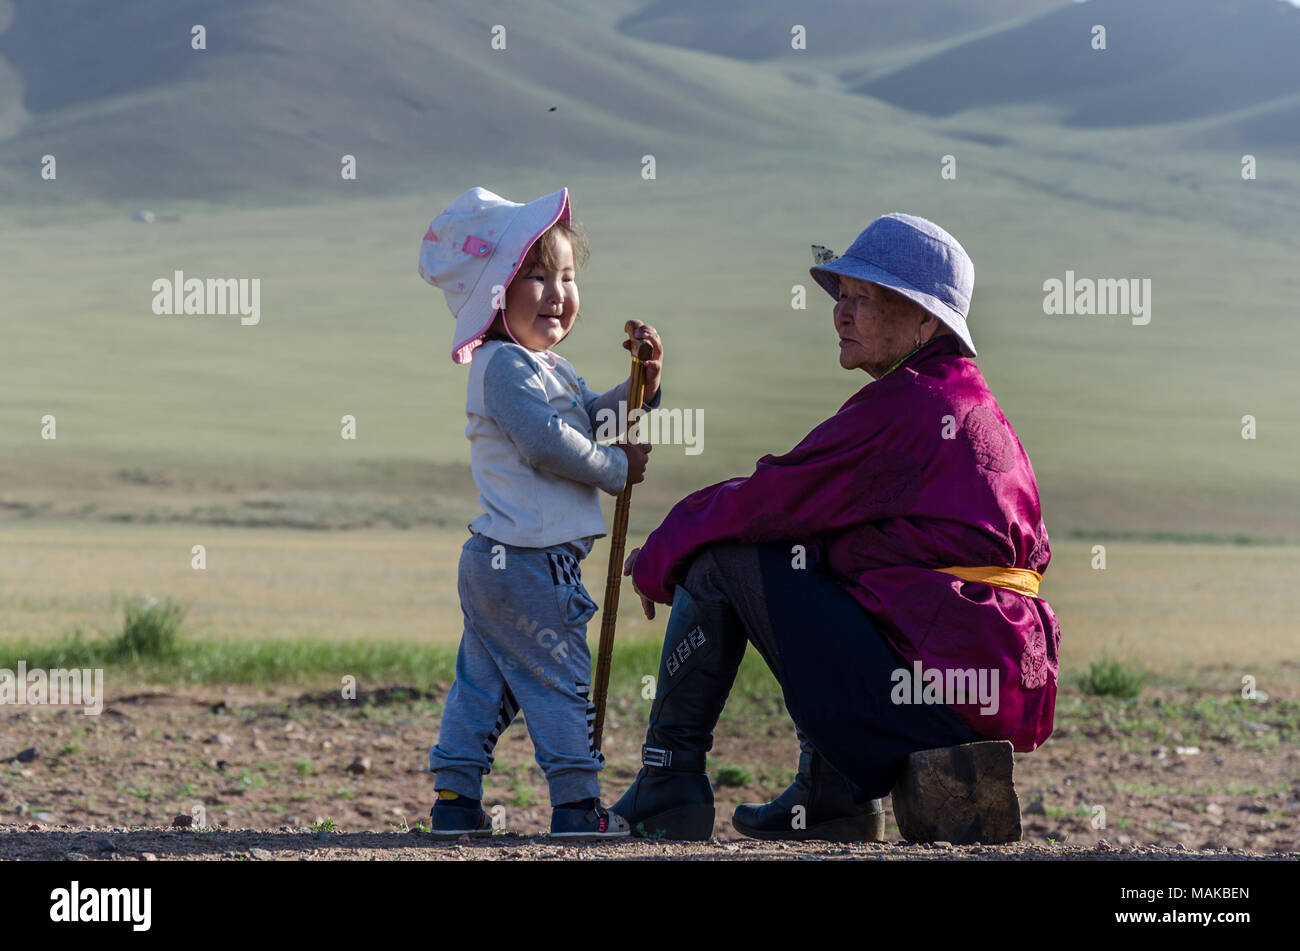 Spectators at the Naadam Festival, Murun, Mongolia Stock Photo